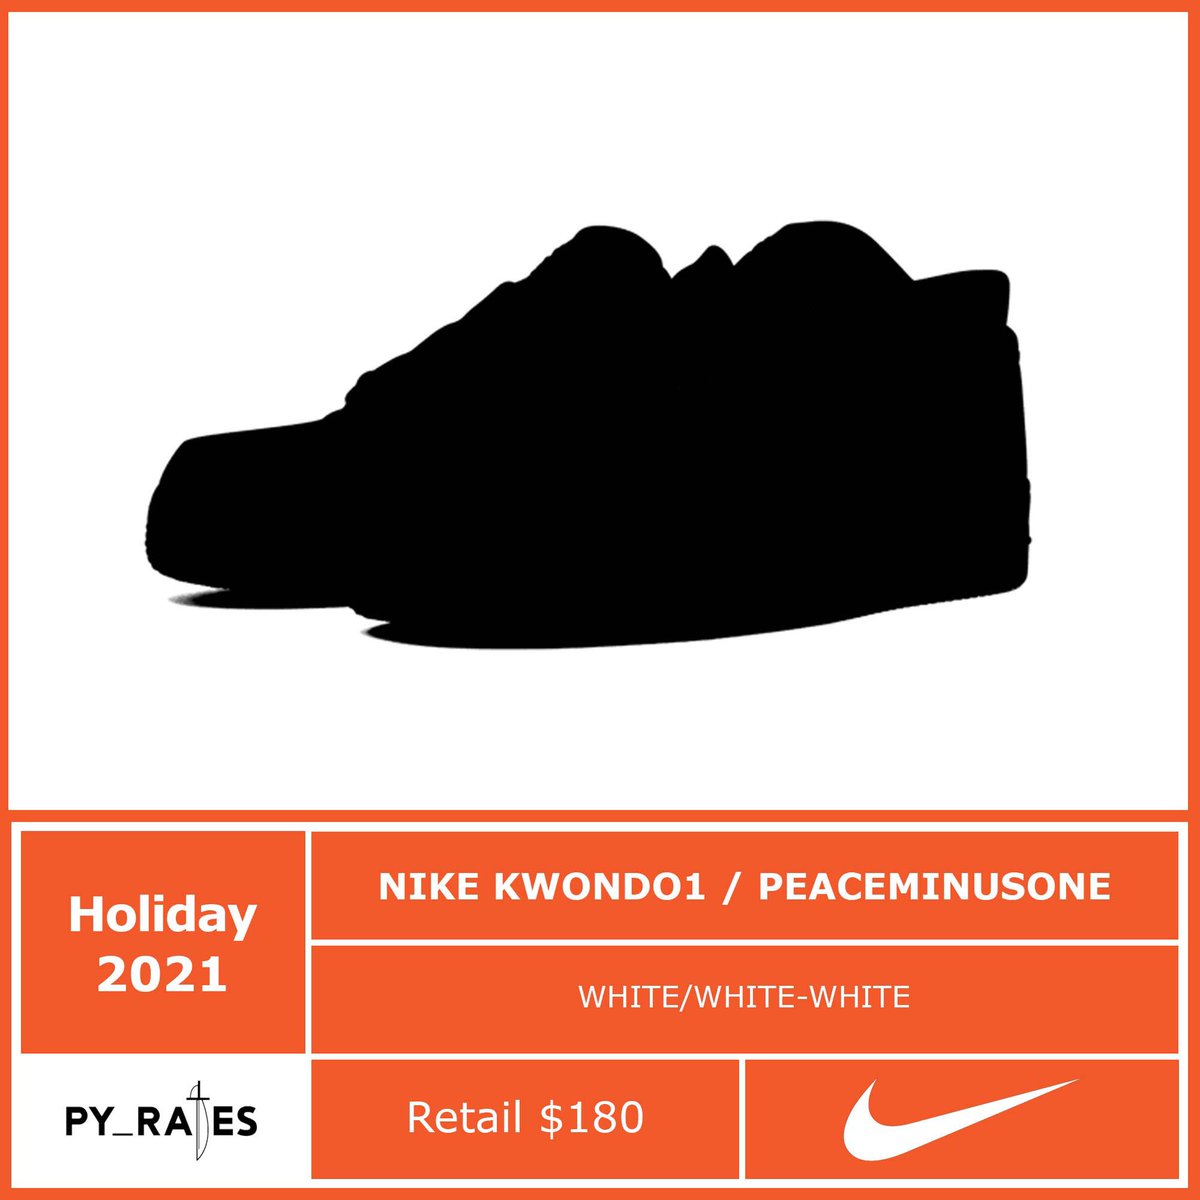 Peaceminusone Nike Kwondo 1 Release Date